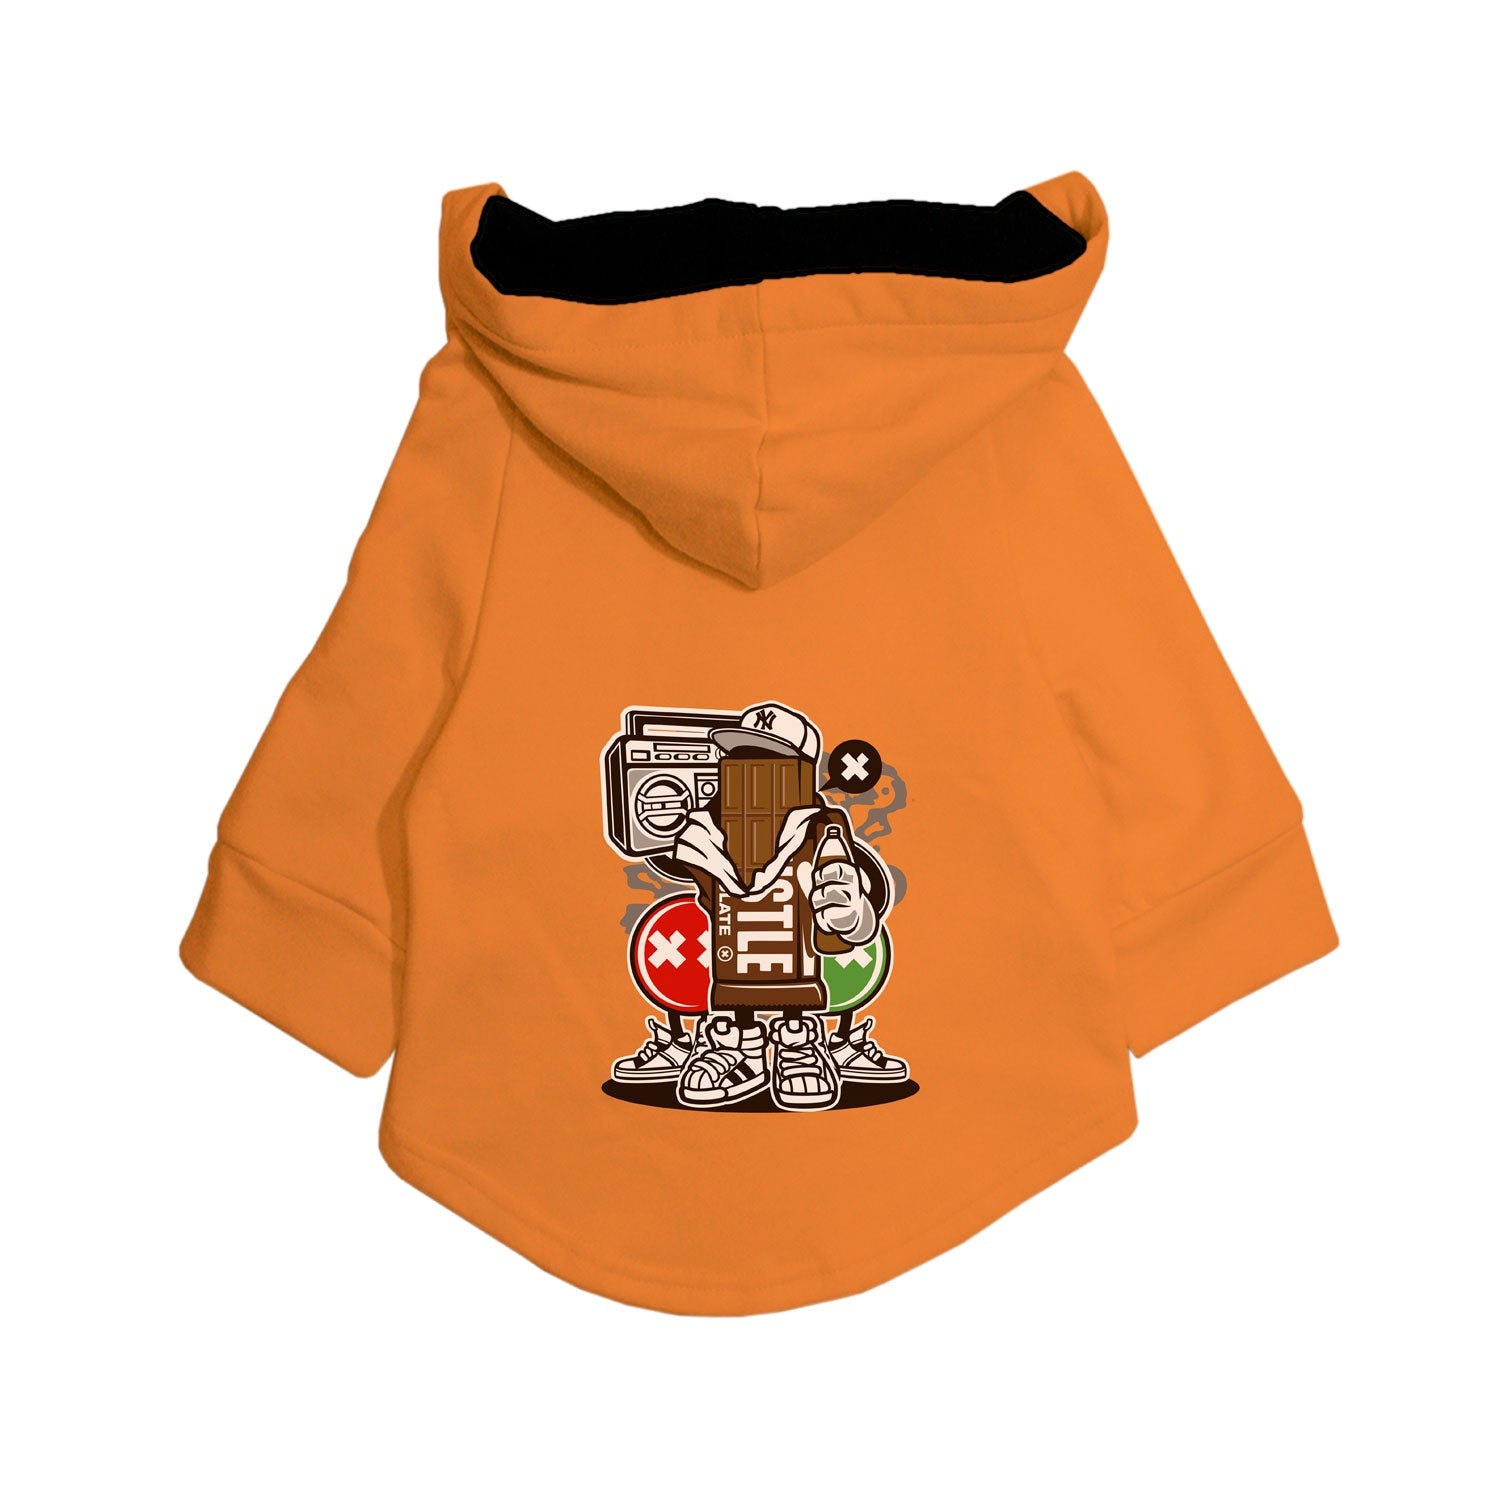 Ruse / Orange / chocolate-squad-dog-hoodie